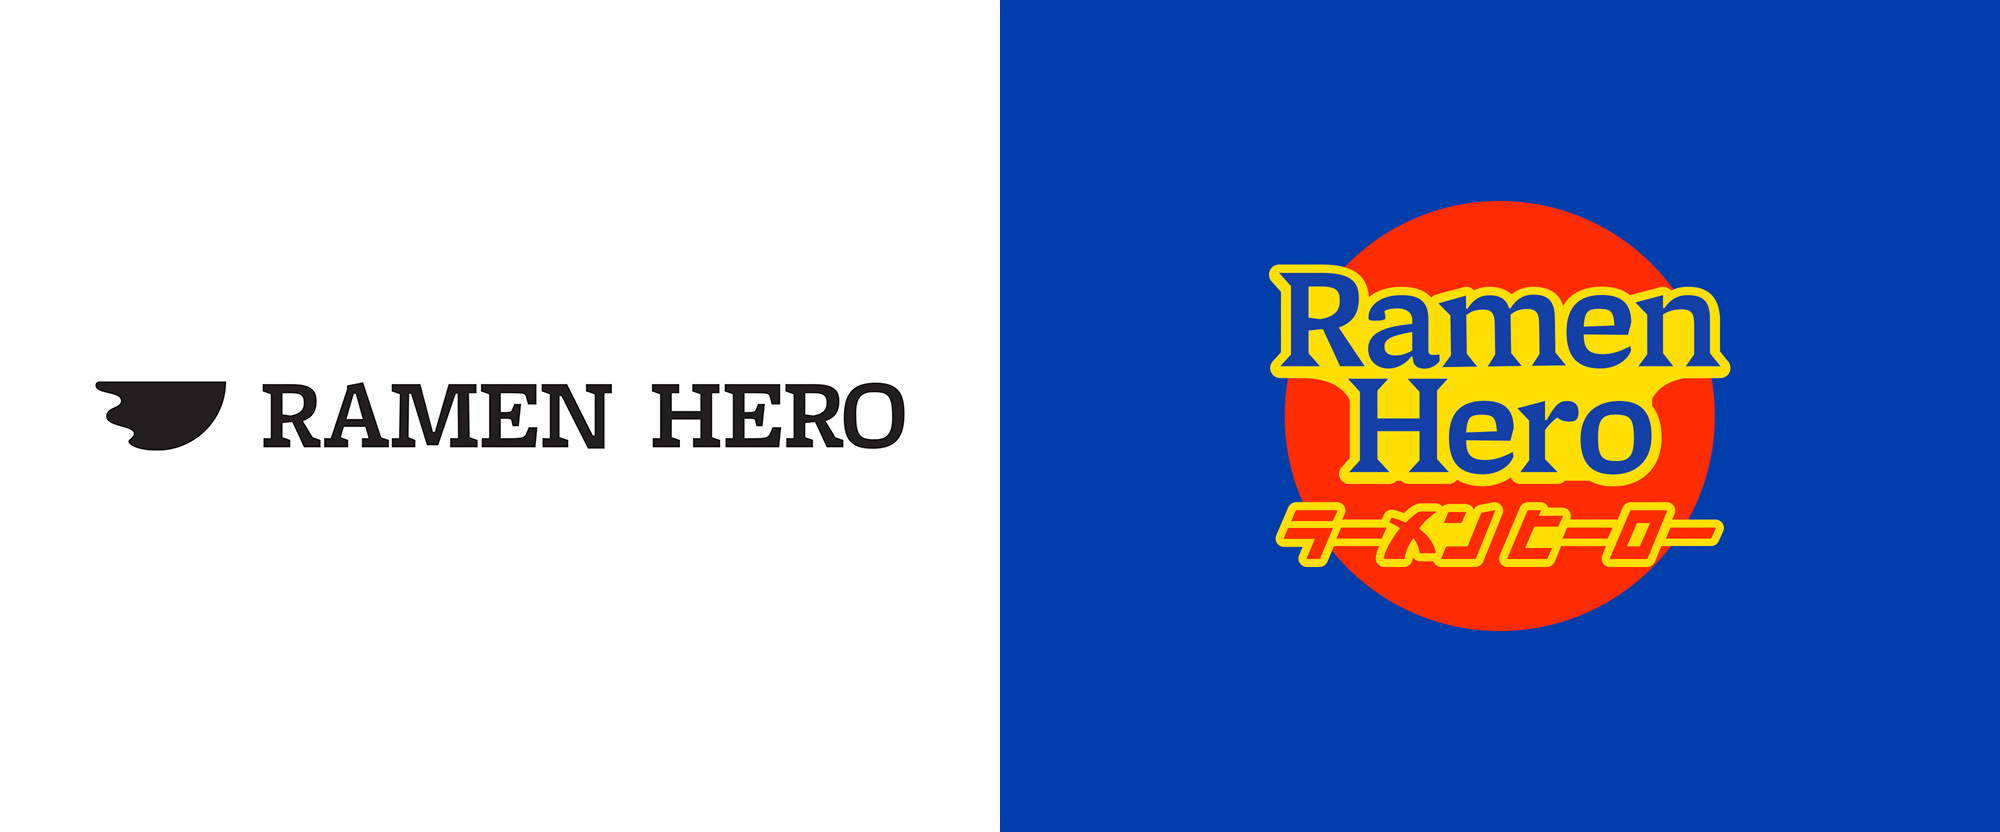 New Logo, Identity, and Awesome Cowboy for Ramen Hero by Iyashi